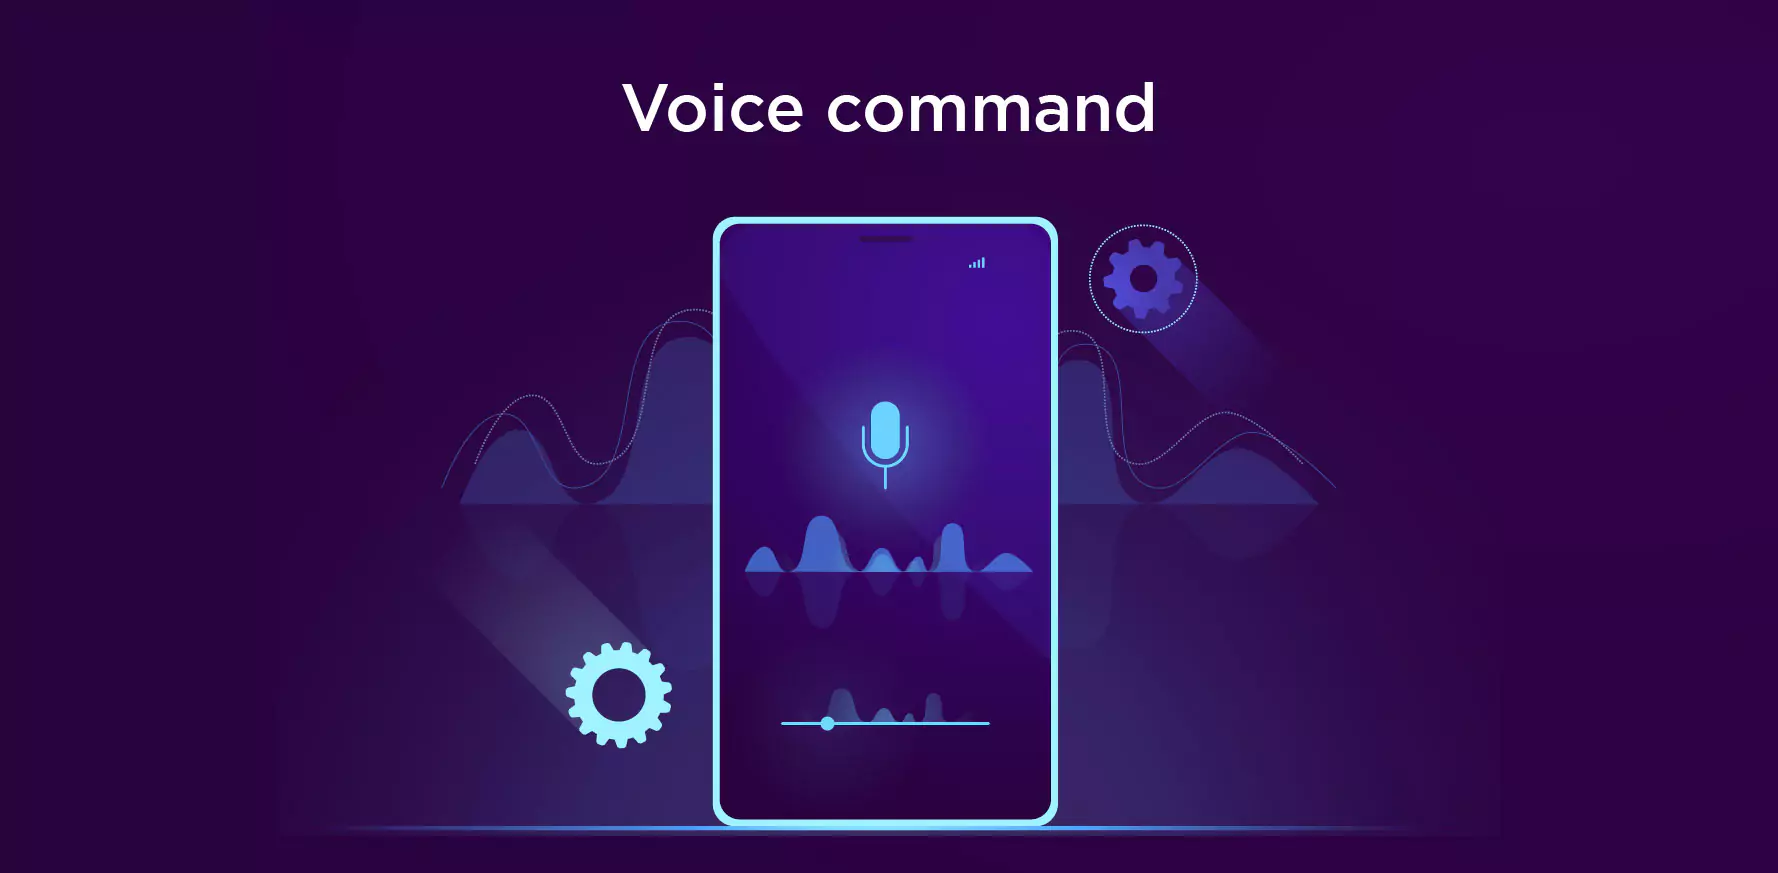 Voice command